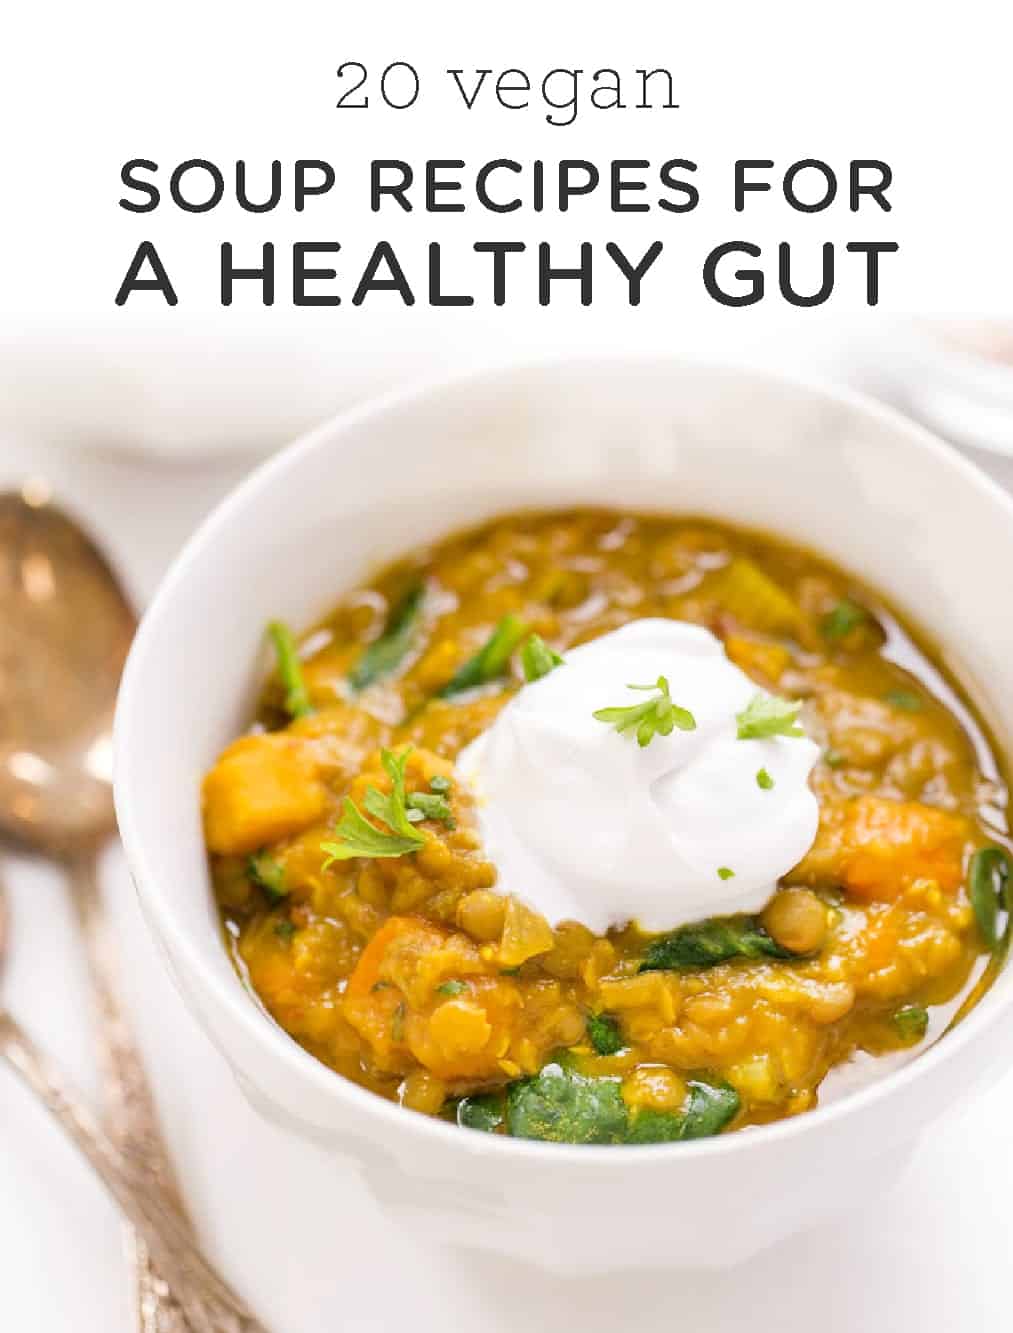 20 Vegan Soup Recipes for A Healthy Gut